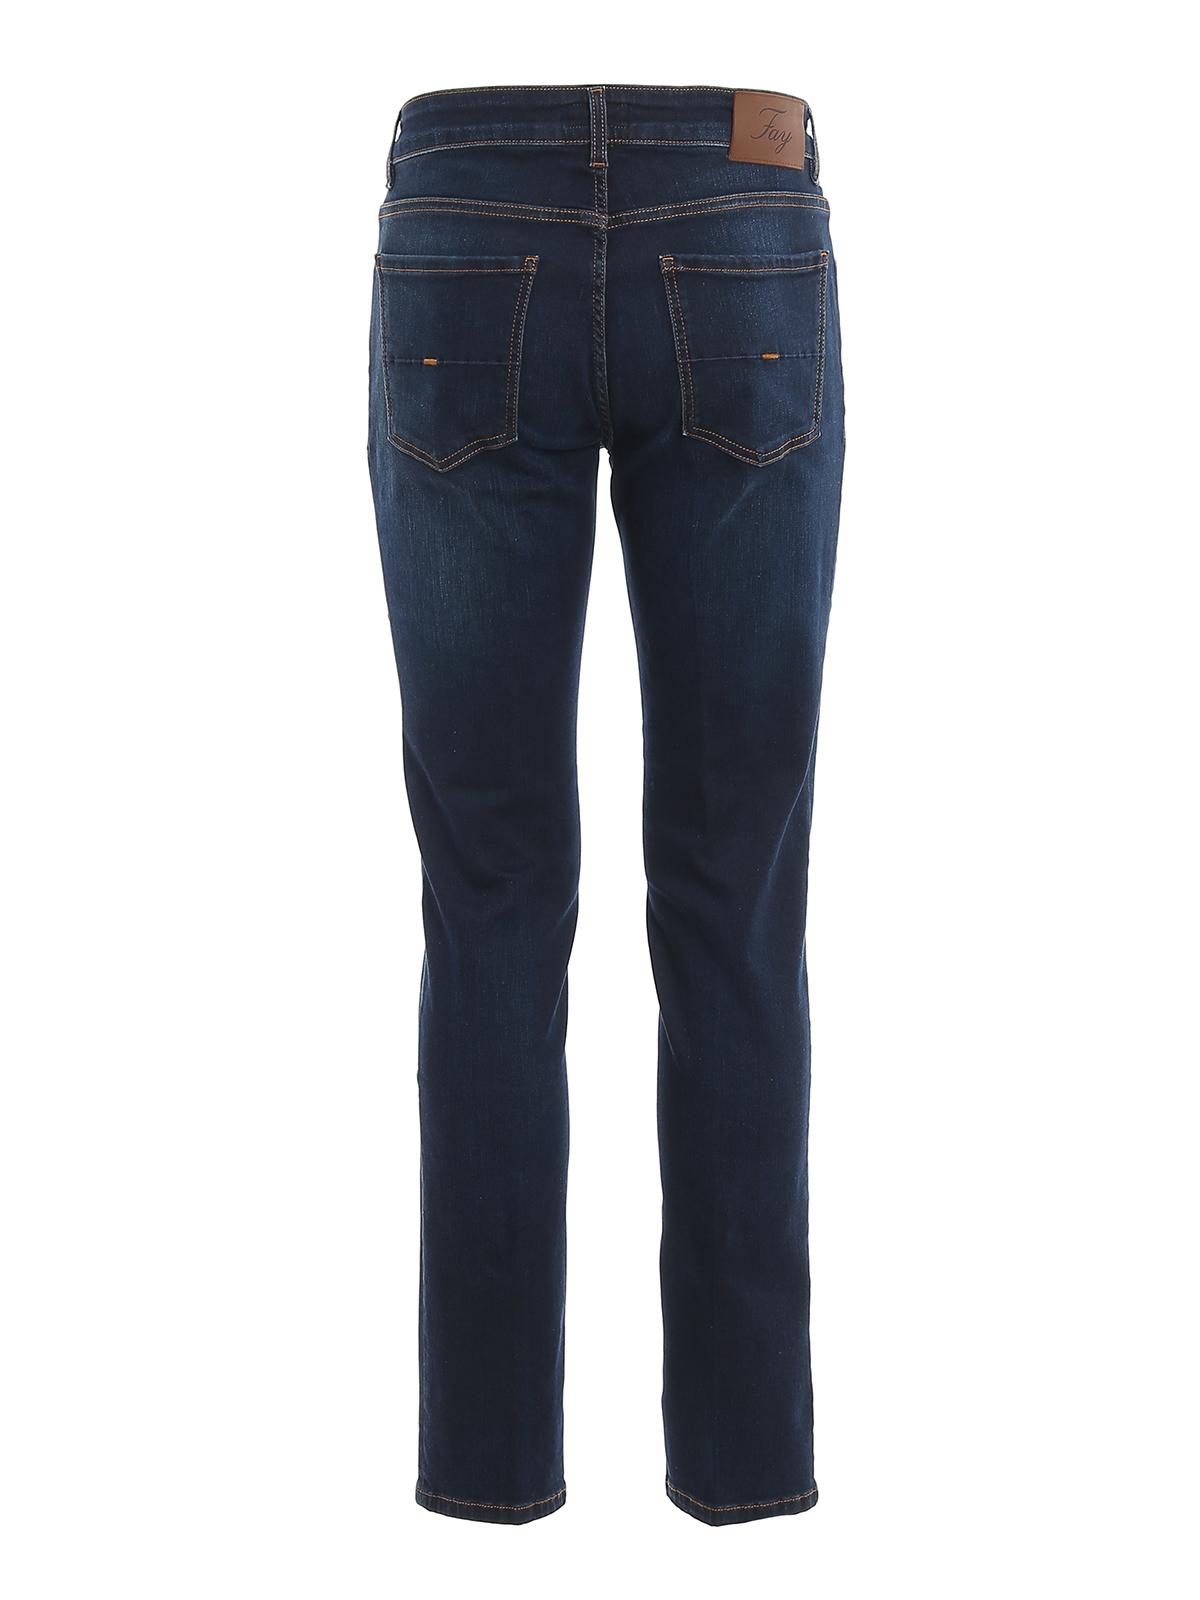 Fay Dark Stretch Denim Jeans in Dark Wash (Blue) for Men - Lyst